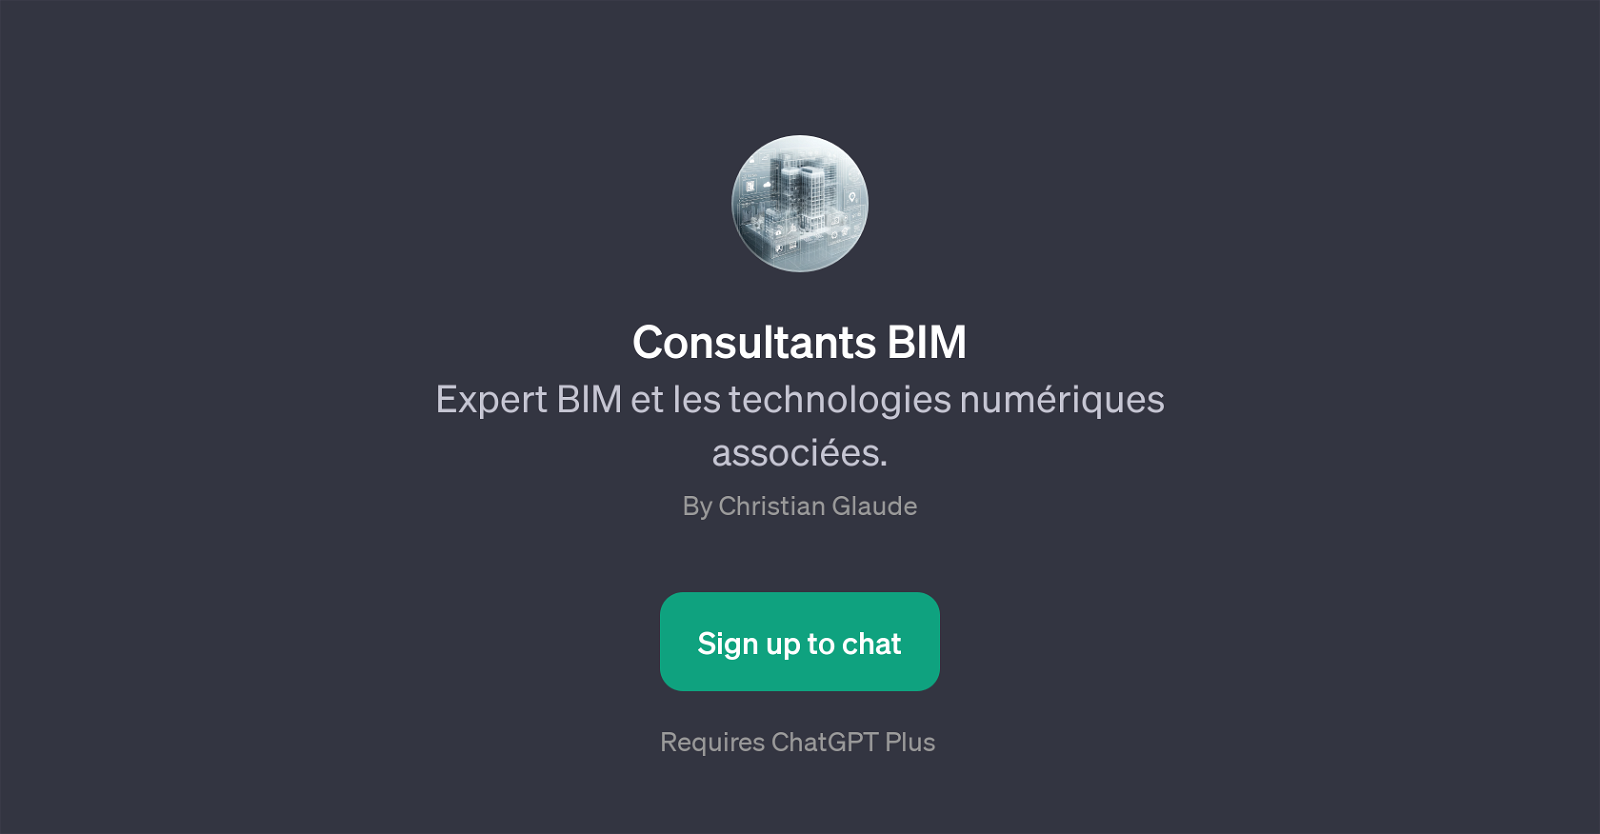 Consultants BIM website